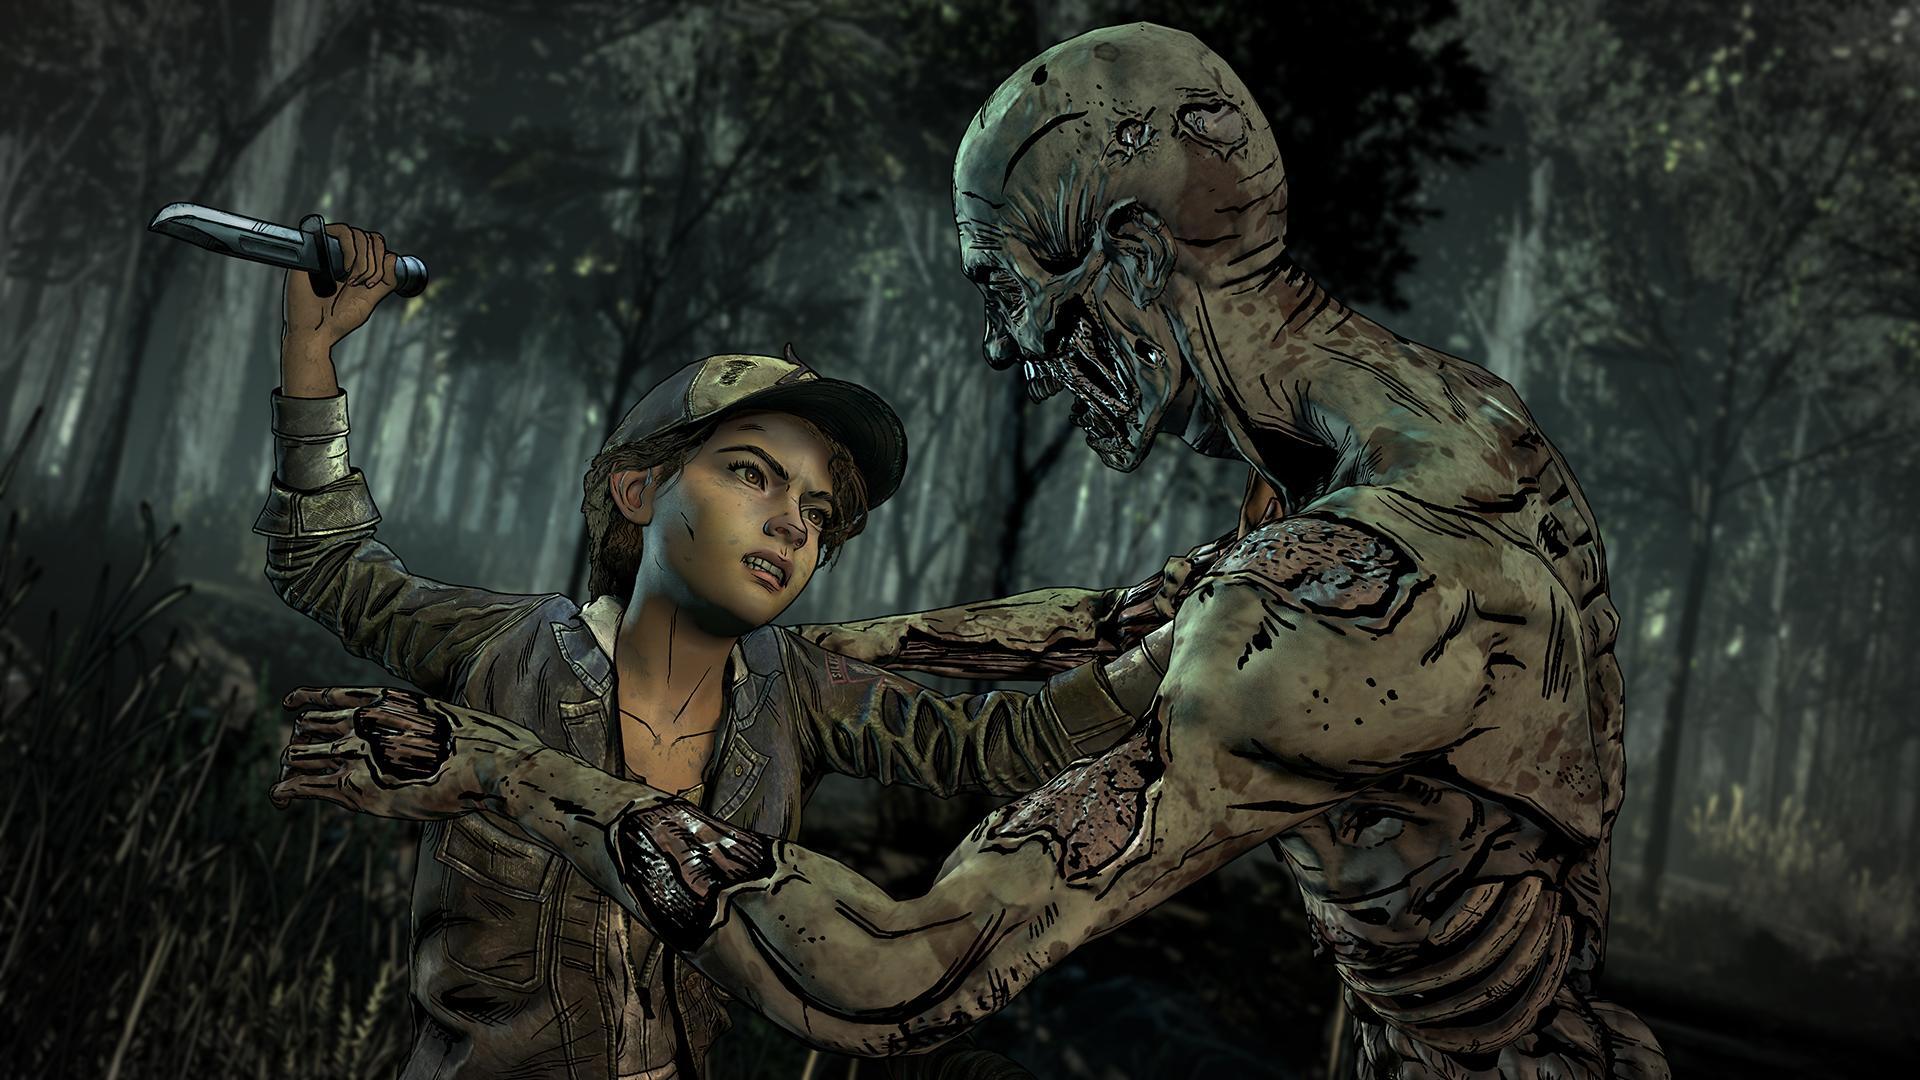 The Walking Dead: The Final Season screenshot 2